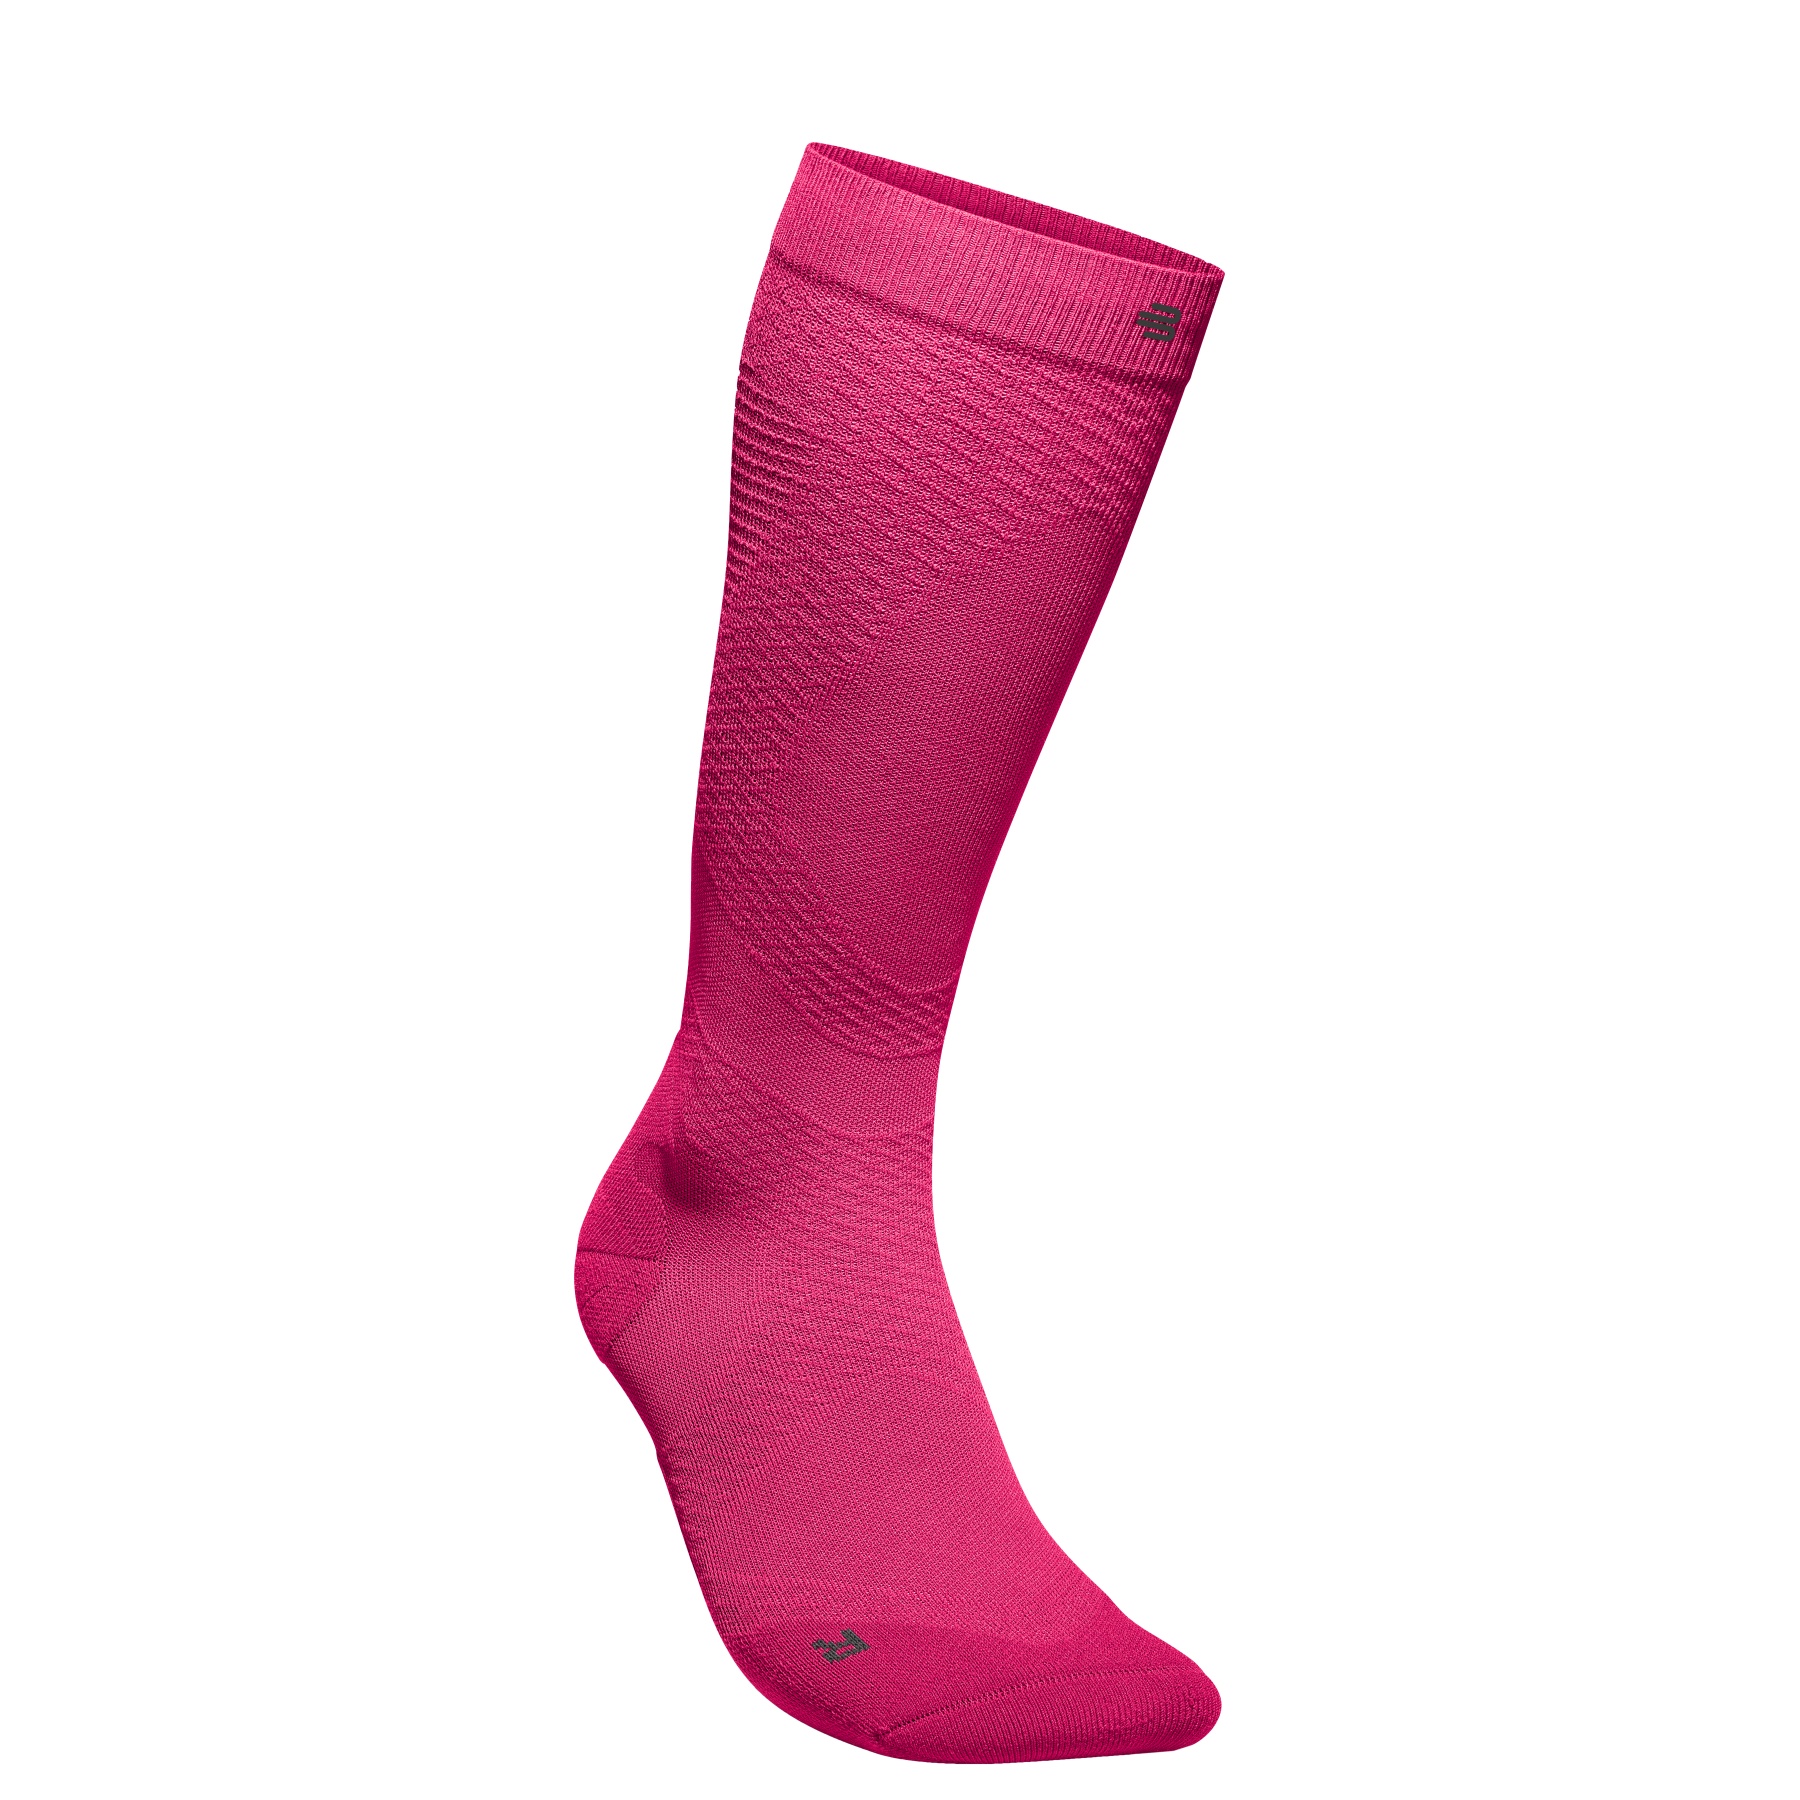 Immagine prodotto da Bauerfeind Calze a Compressione Uomo - Run Ultralight - pitaya pink - L (41-46 cm)